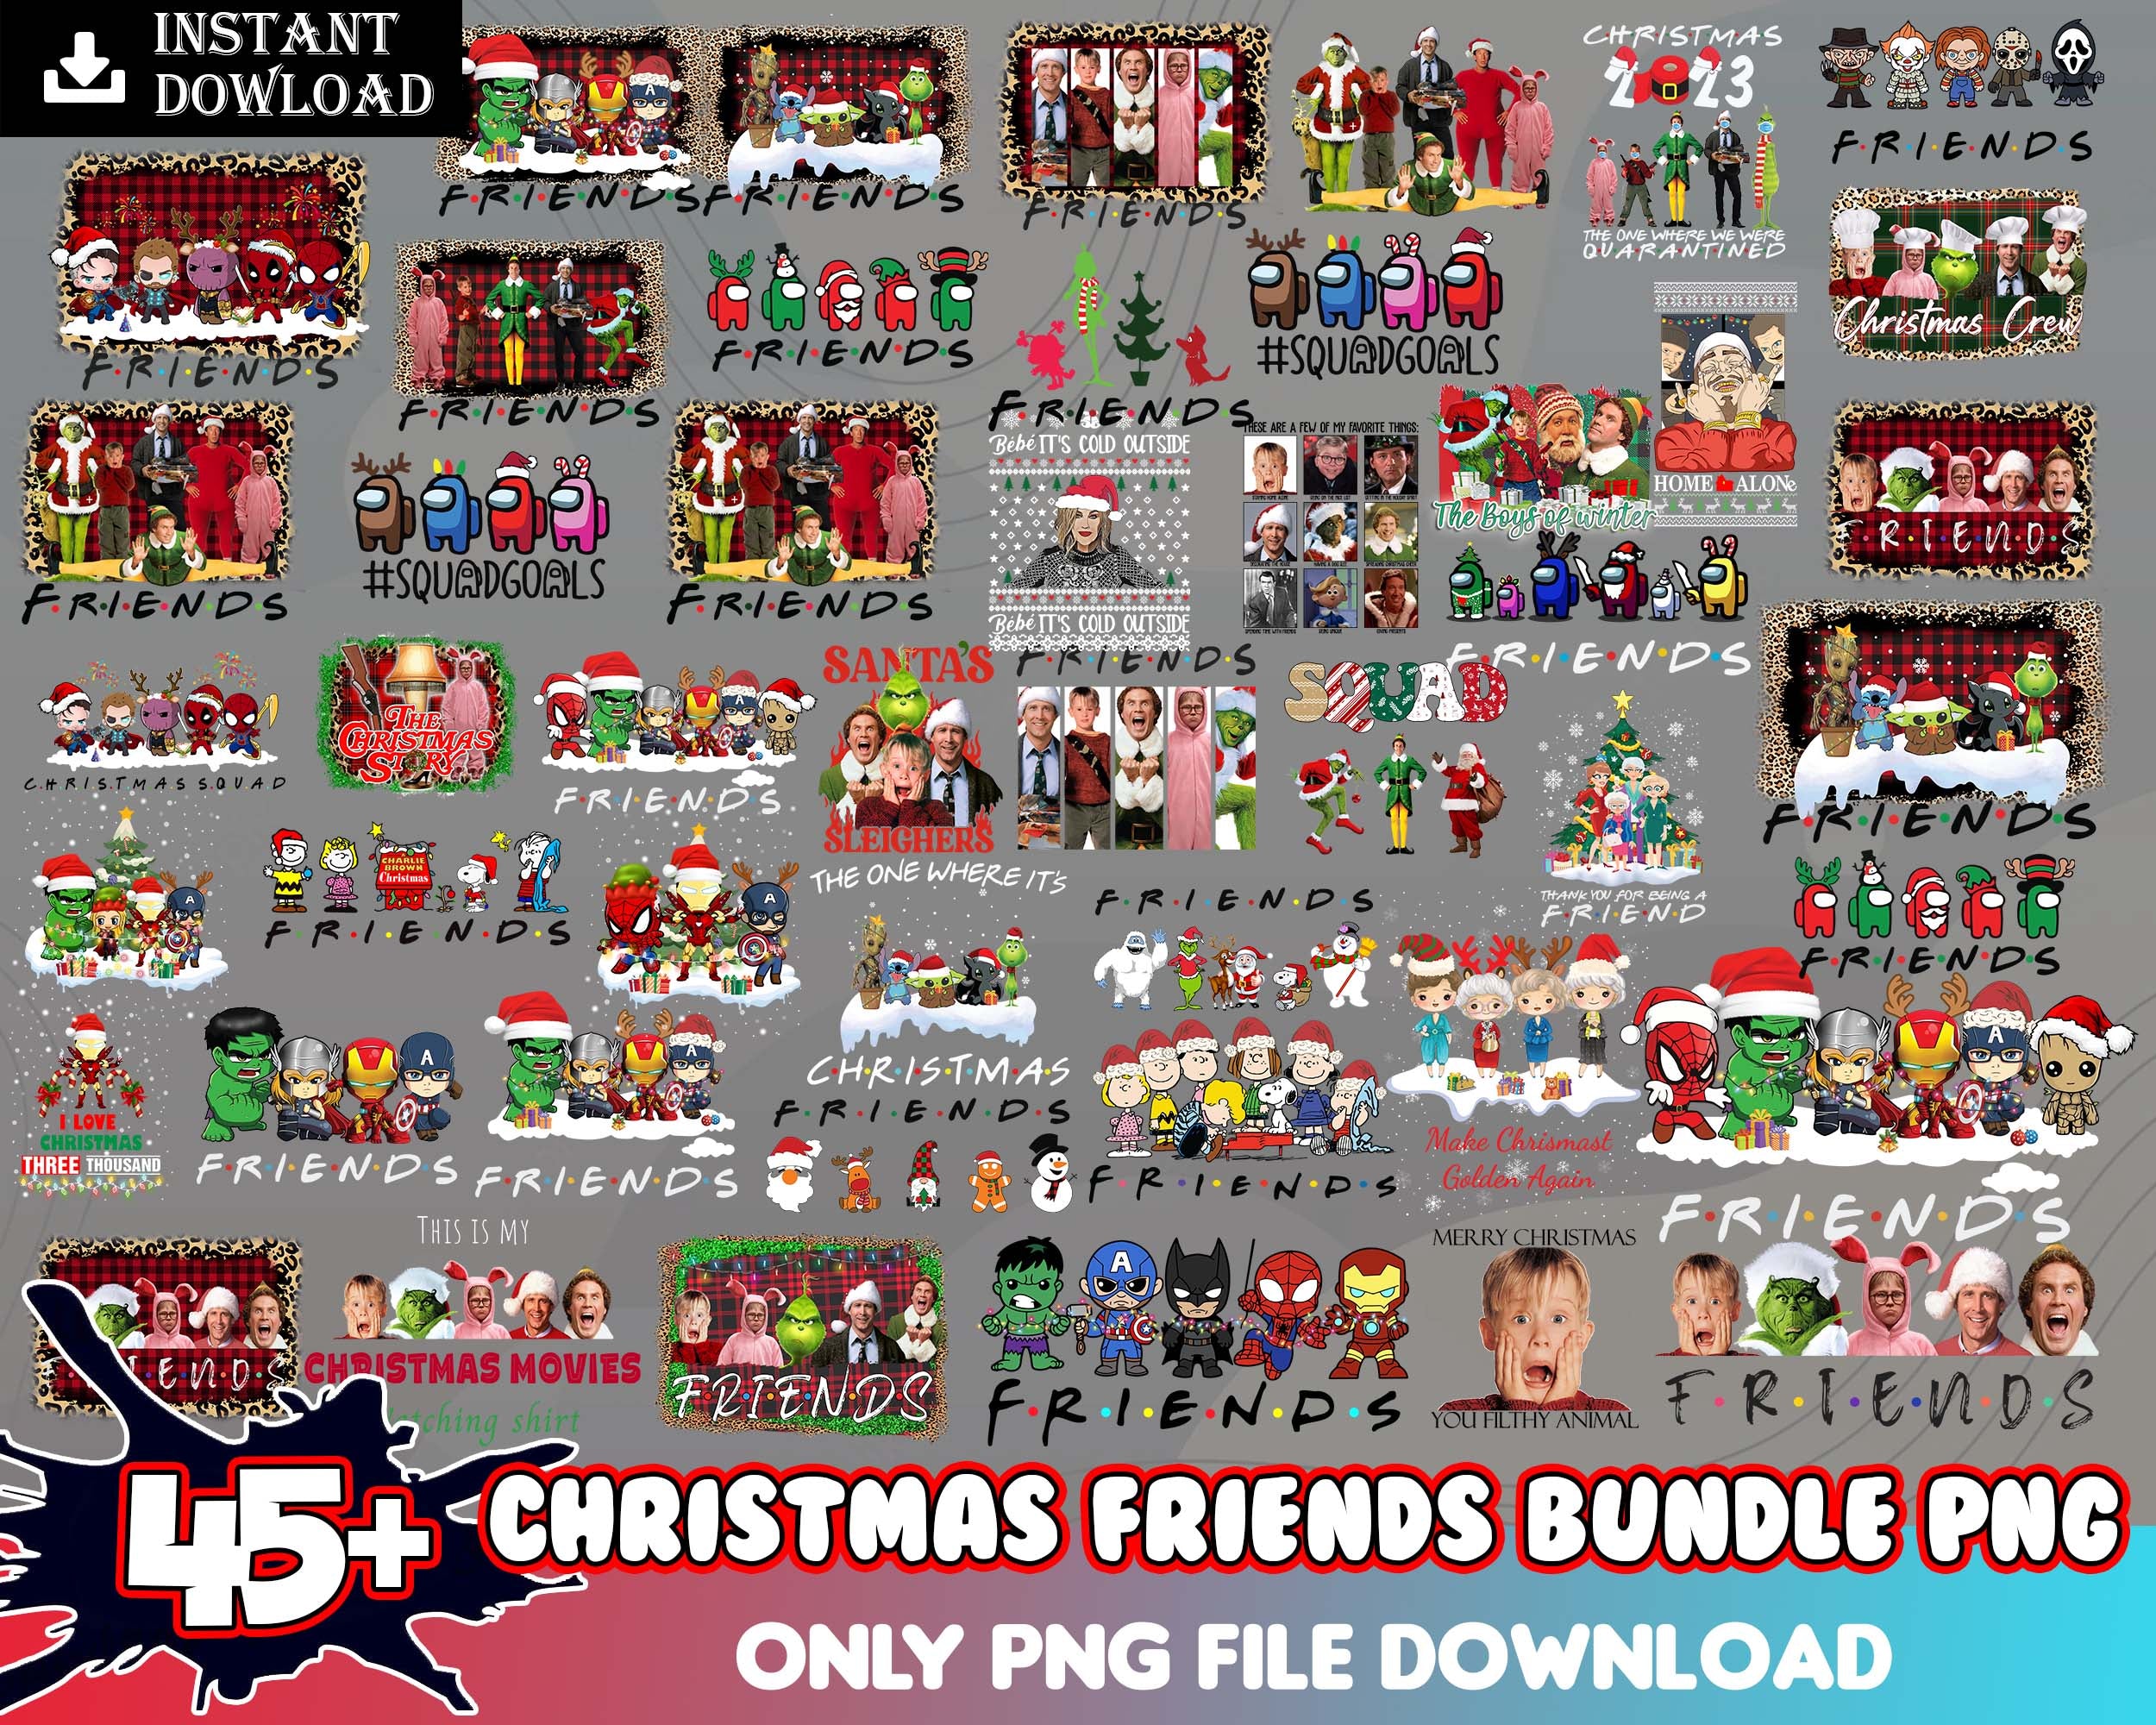 Version 2.0 - 45+ Christmas friends PNG bundle, Christmas digital bundle, Xmas friends designs bundle in PNG formats, Digital files